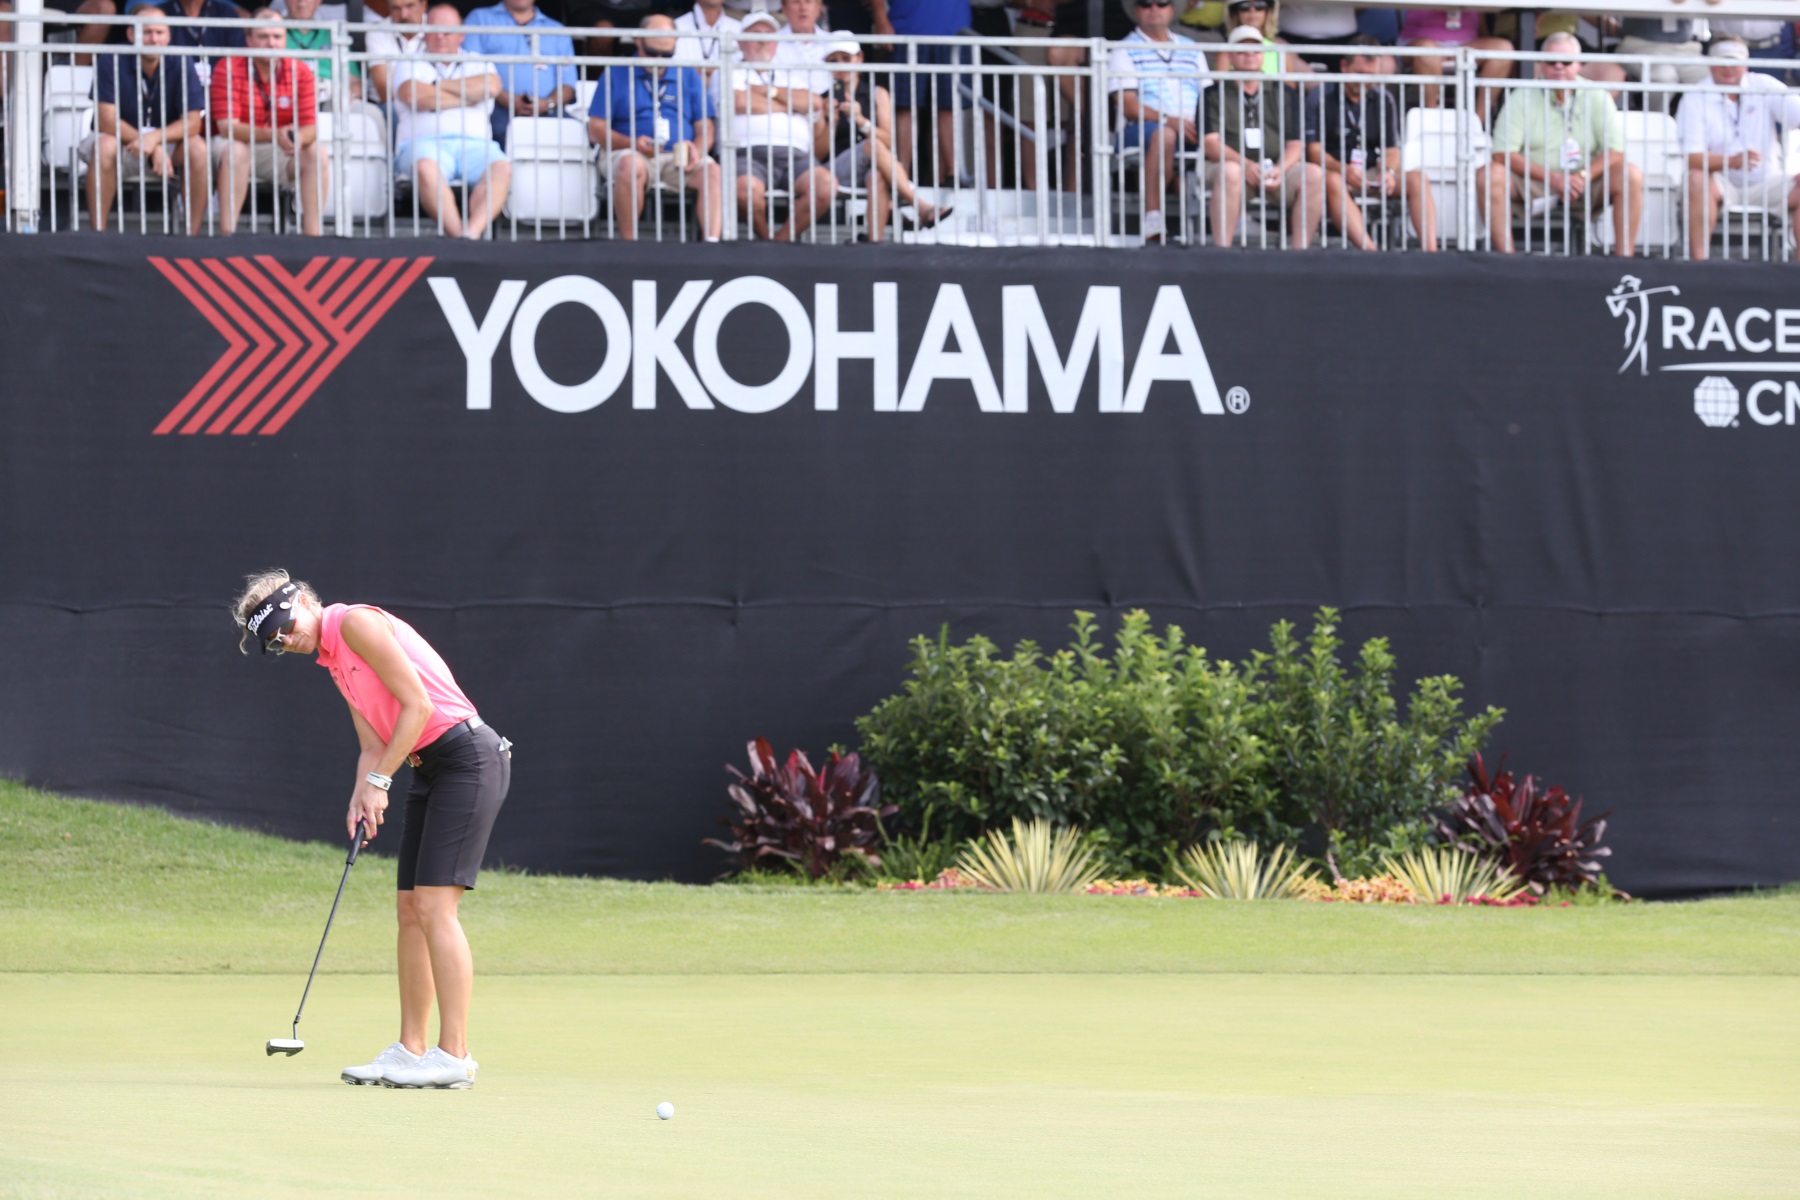 Yokohama continues US ladies’ golf sponsorship